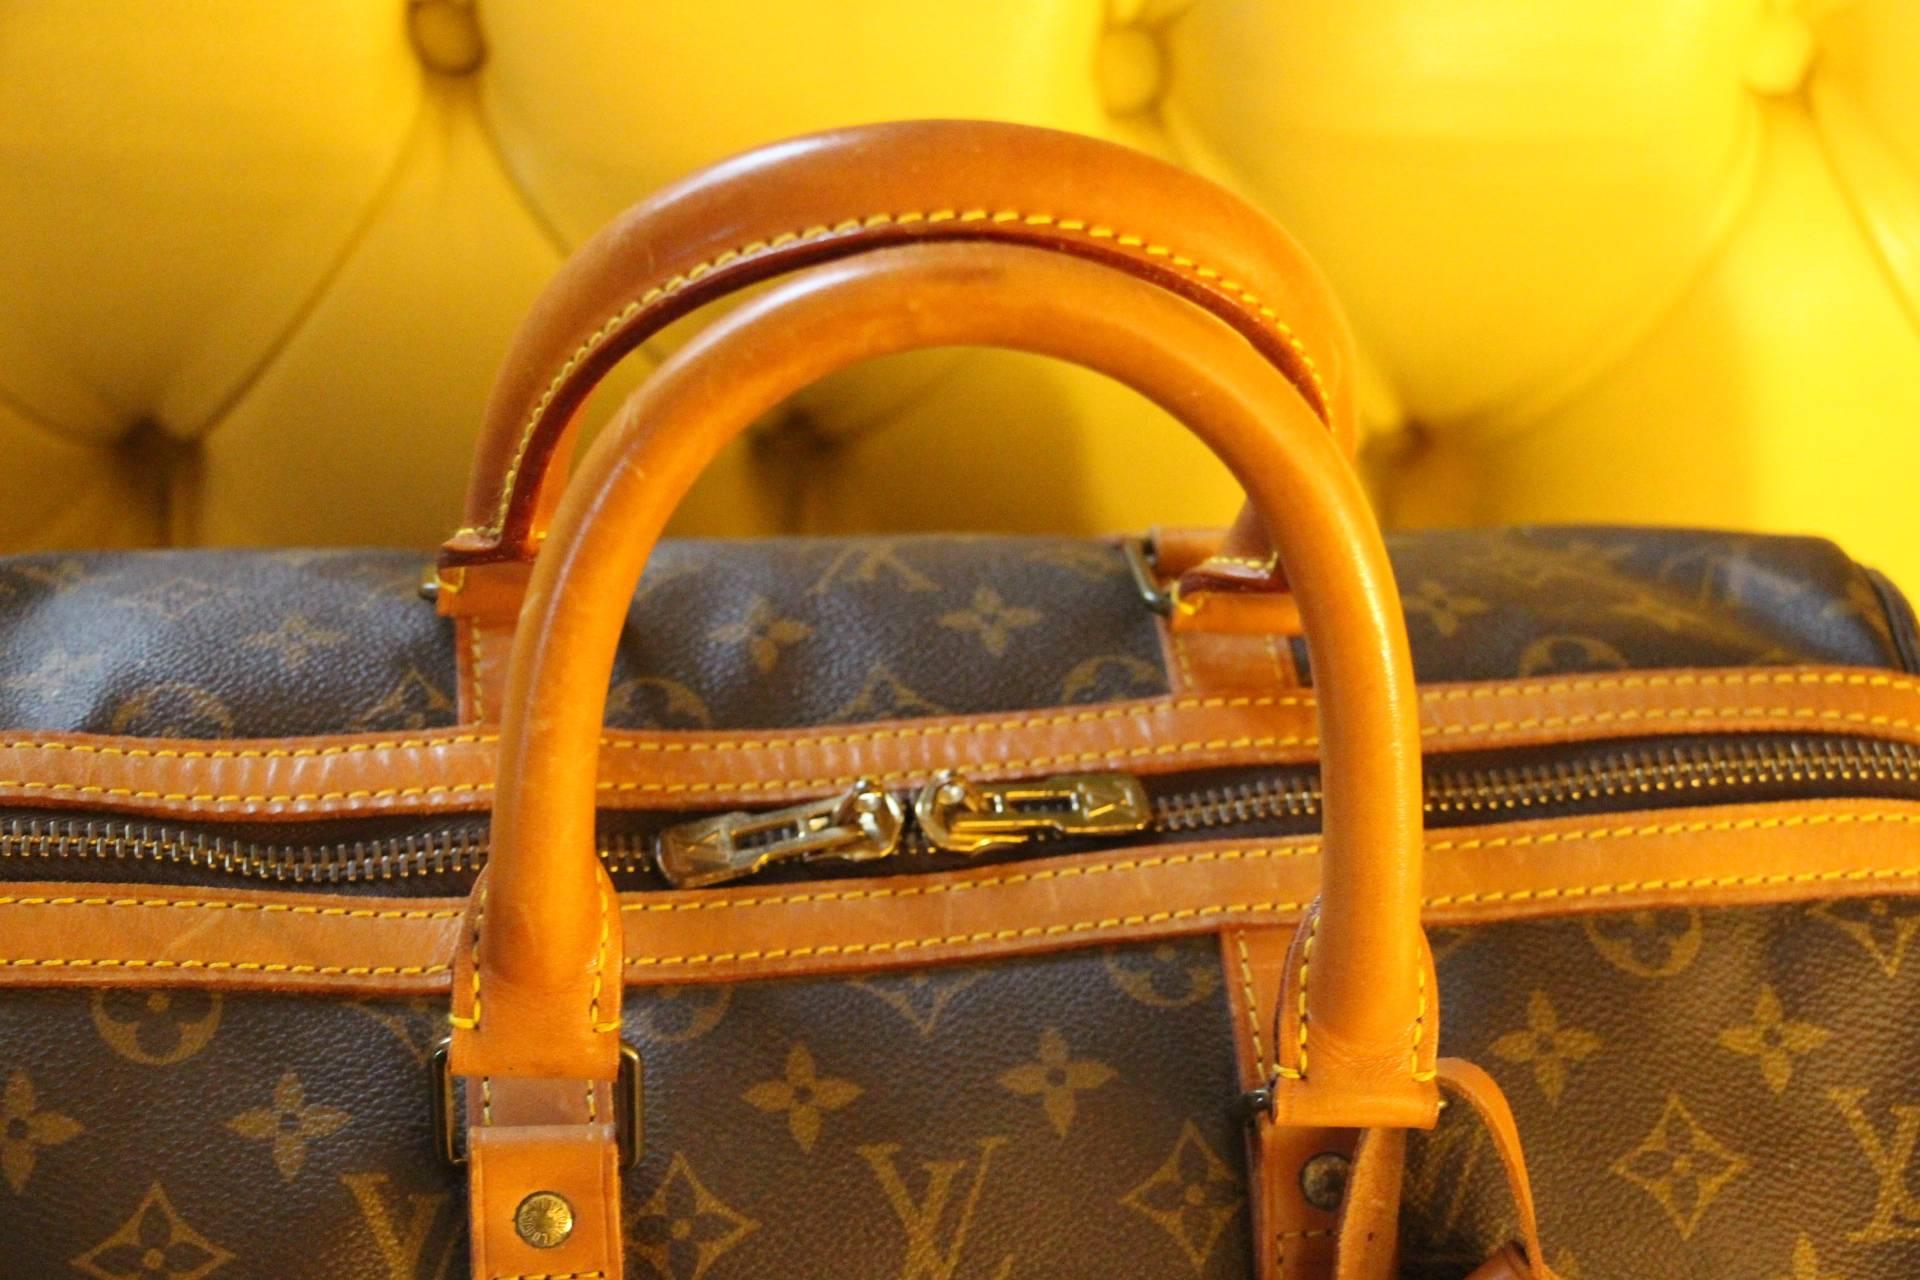 French Large Louis Vuitton Travel Bag